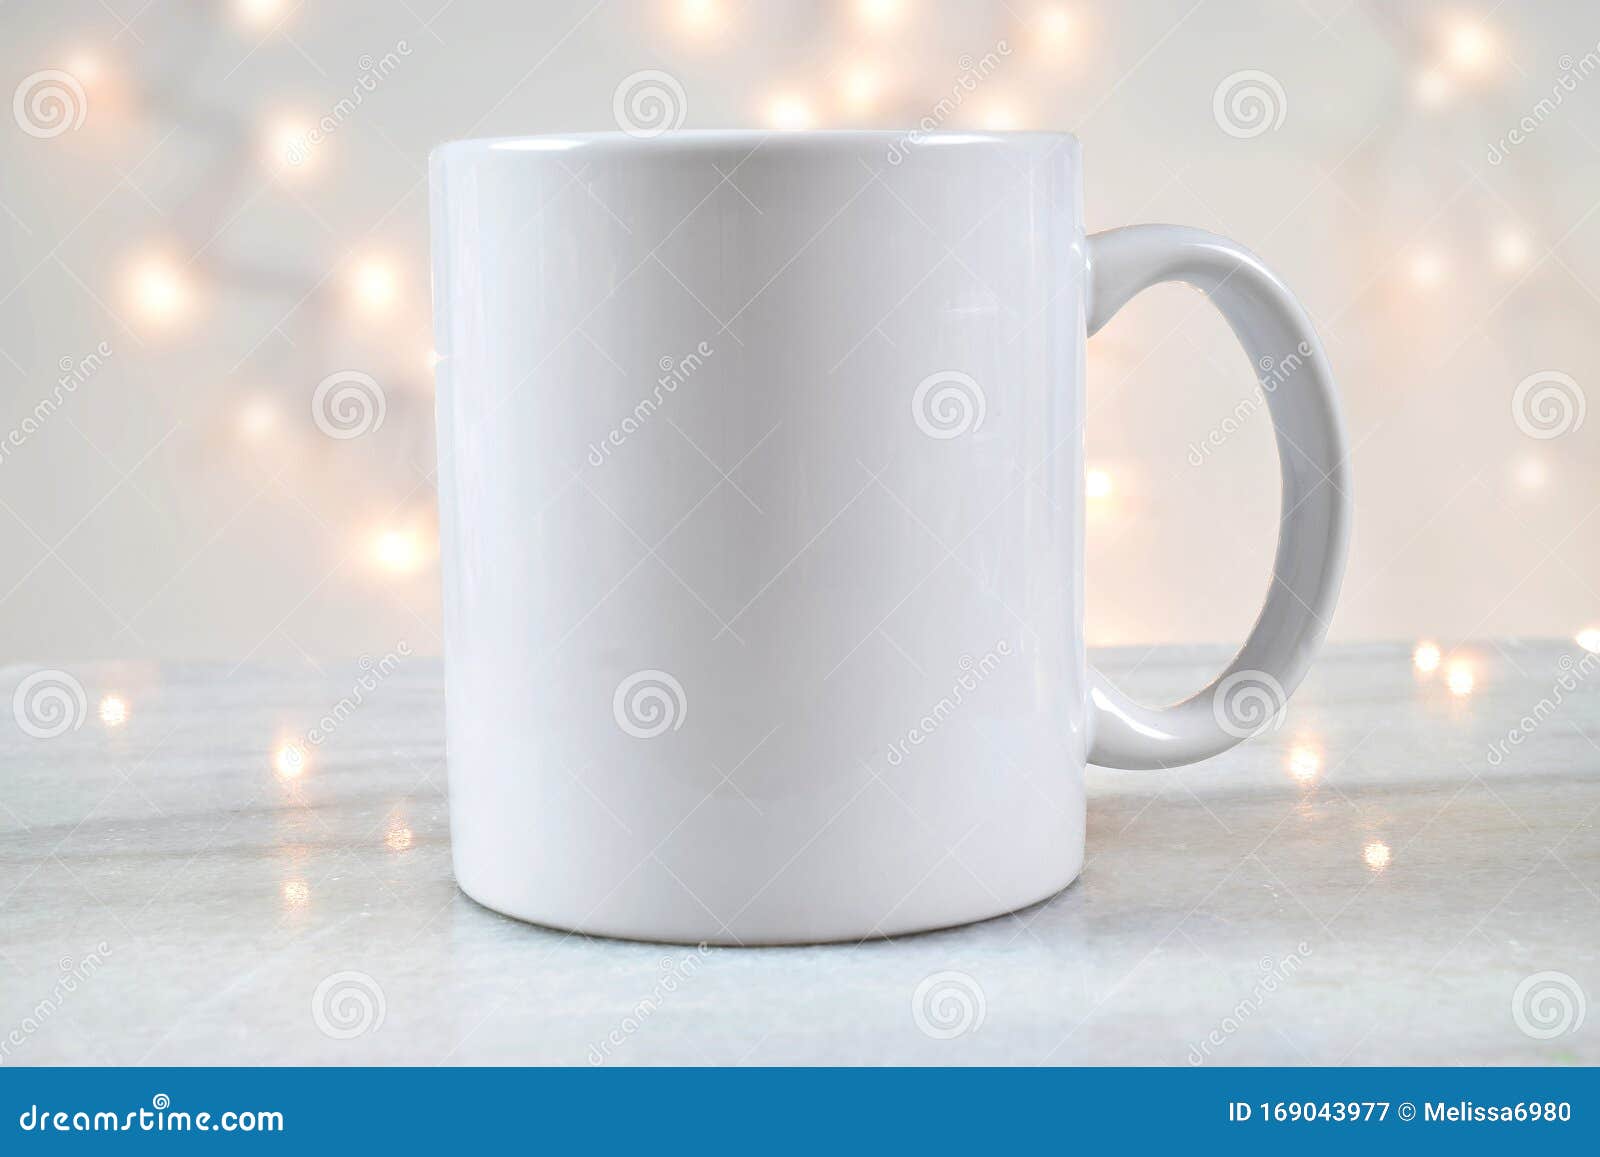 Download 11 Oz White Coffee Mug Mockup With Lights Stock Image Image Of Break Lights 169043977